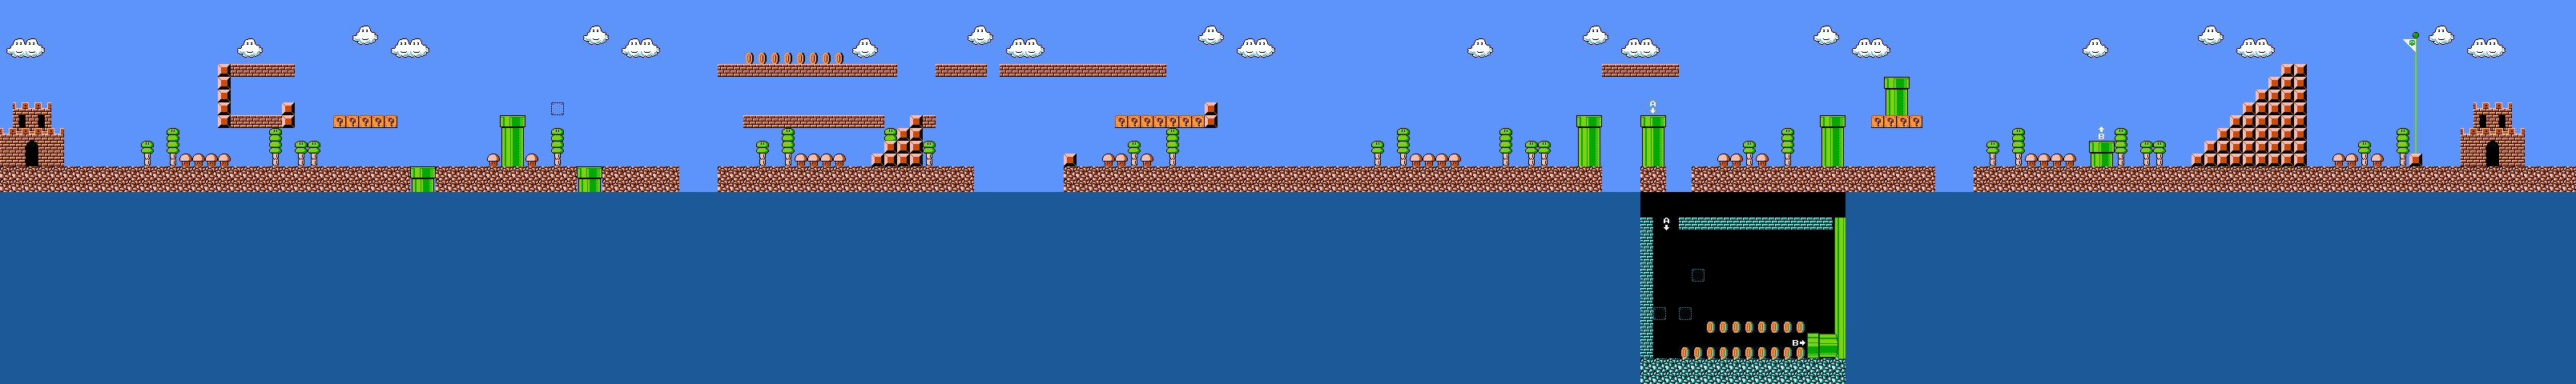 Super Mario Bros. 2 / The Lost Levels (JPN) - World 1-1